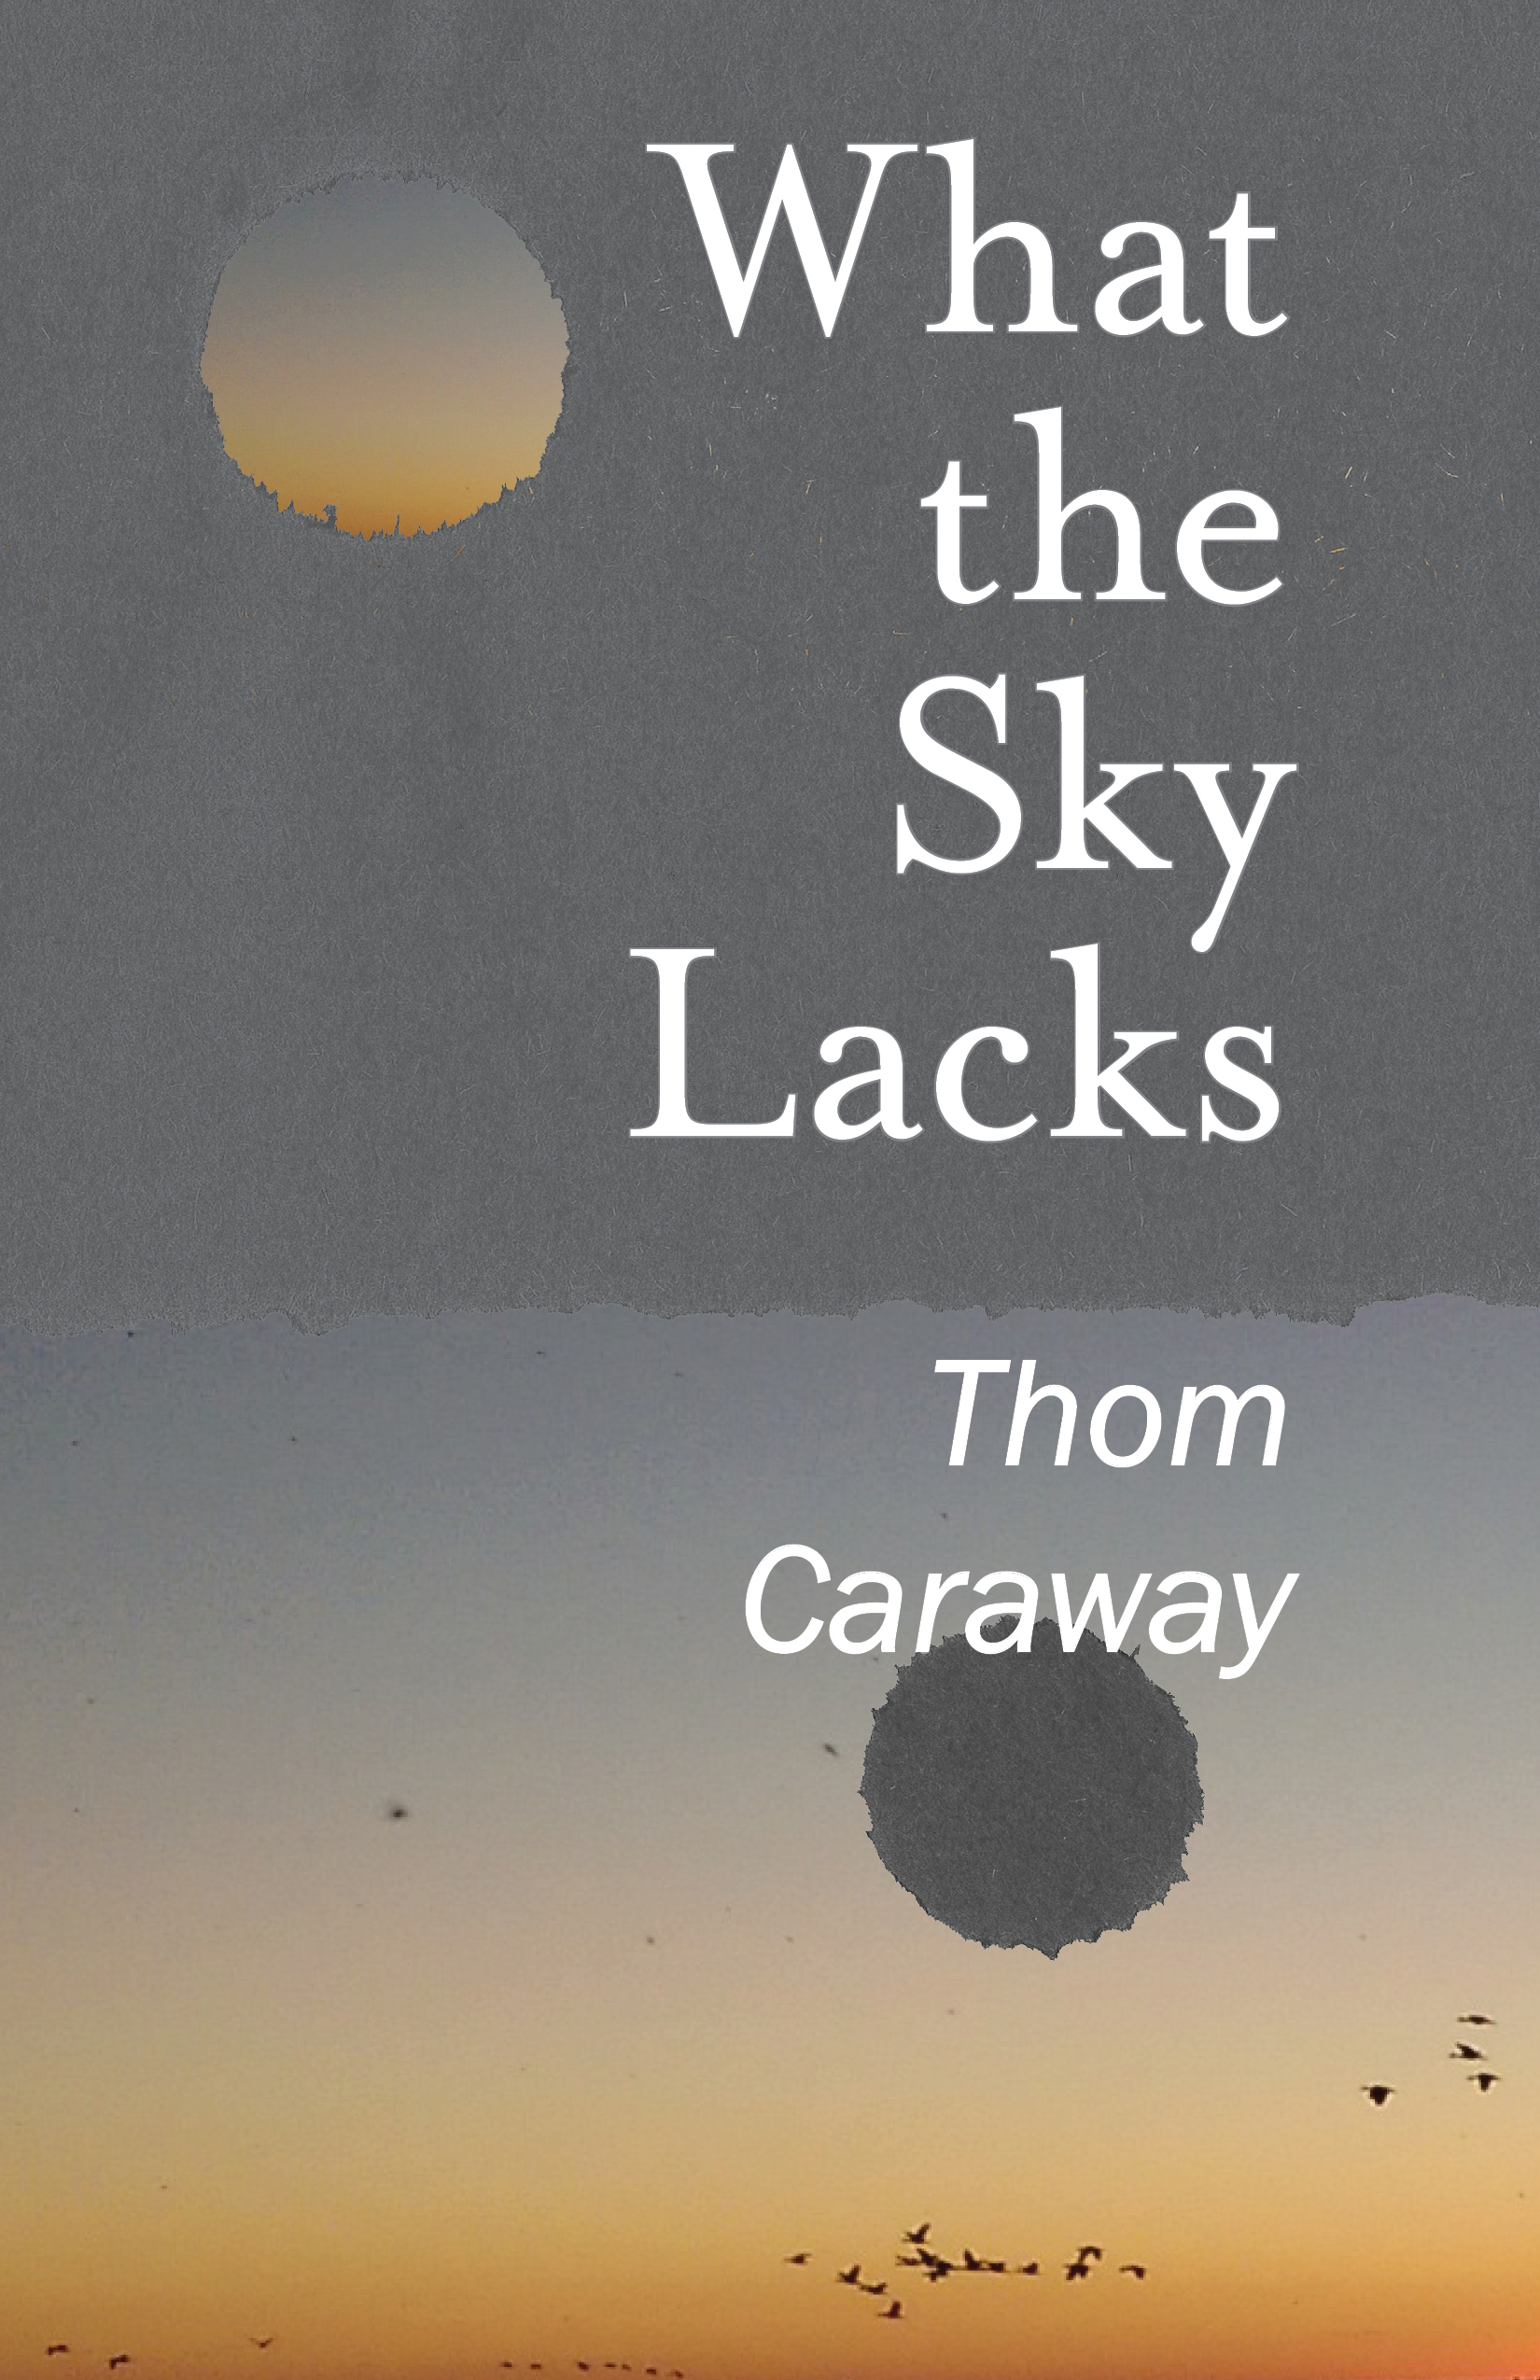 Thom Caraway